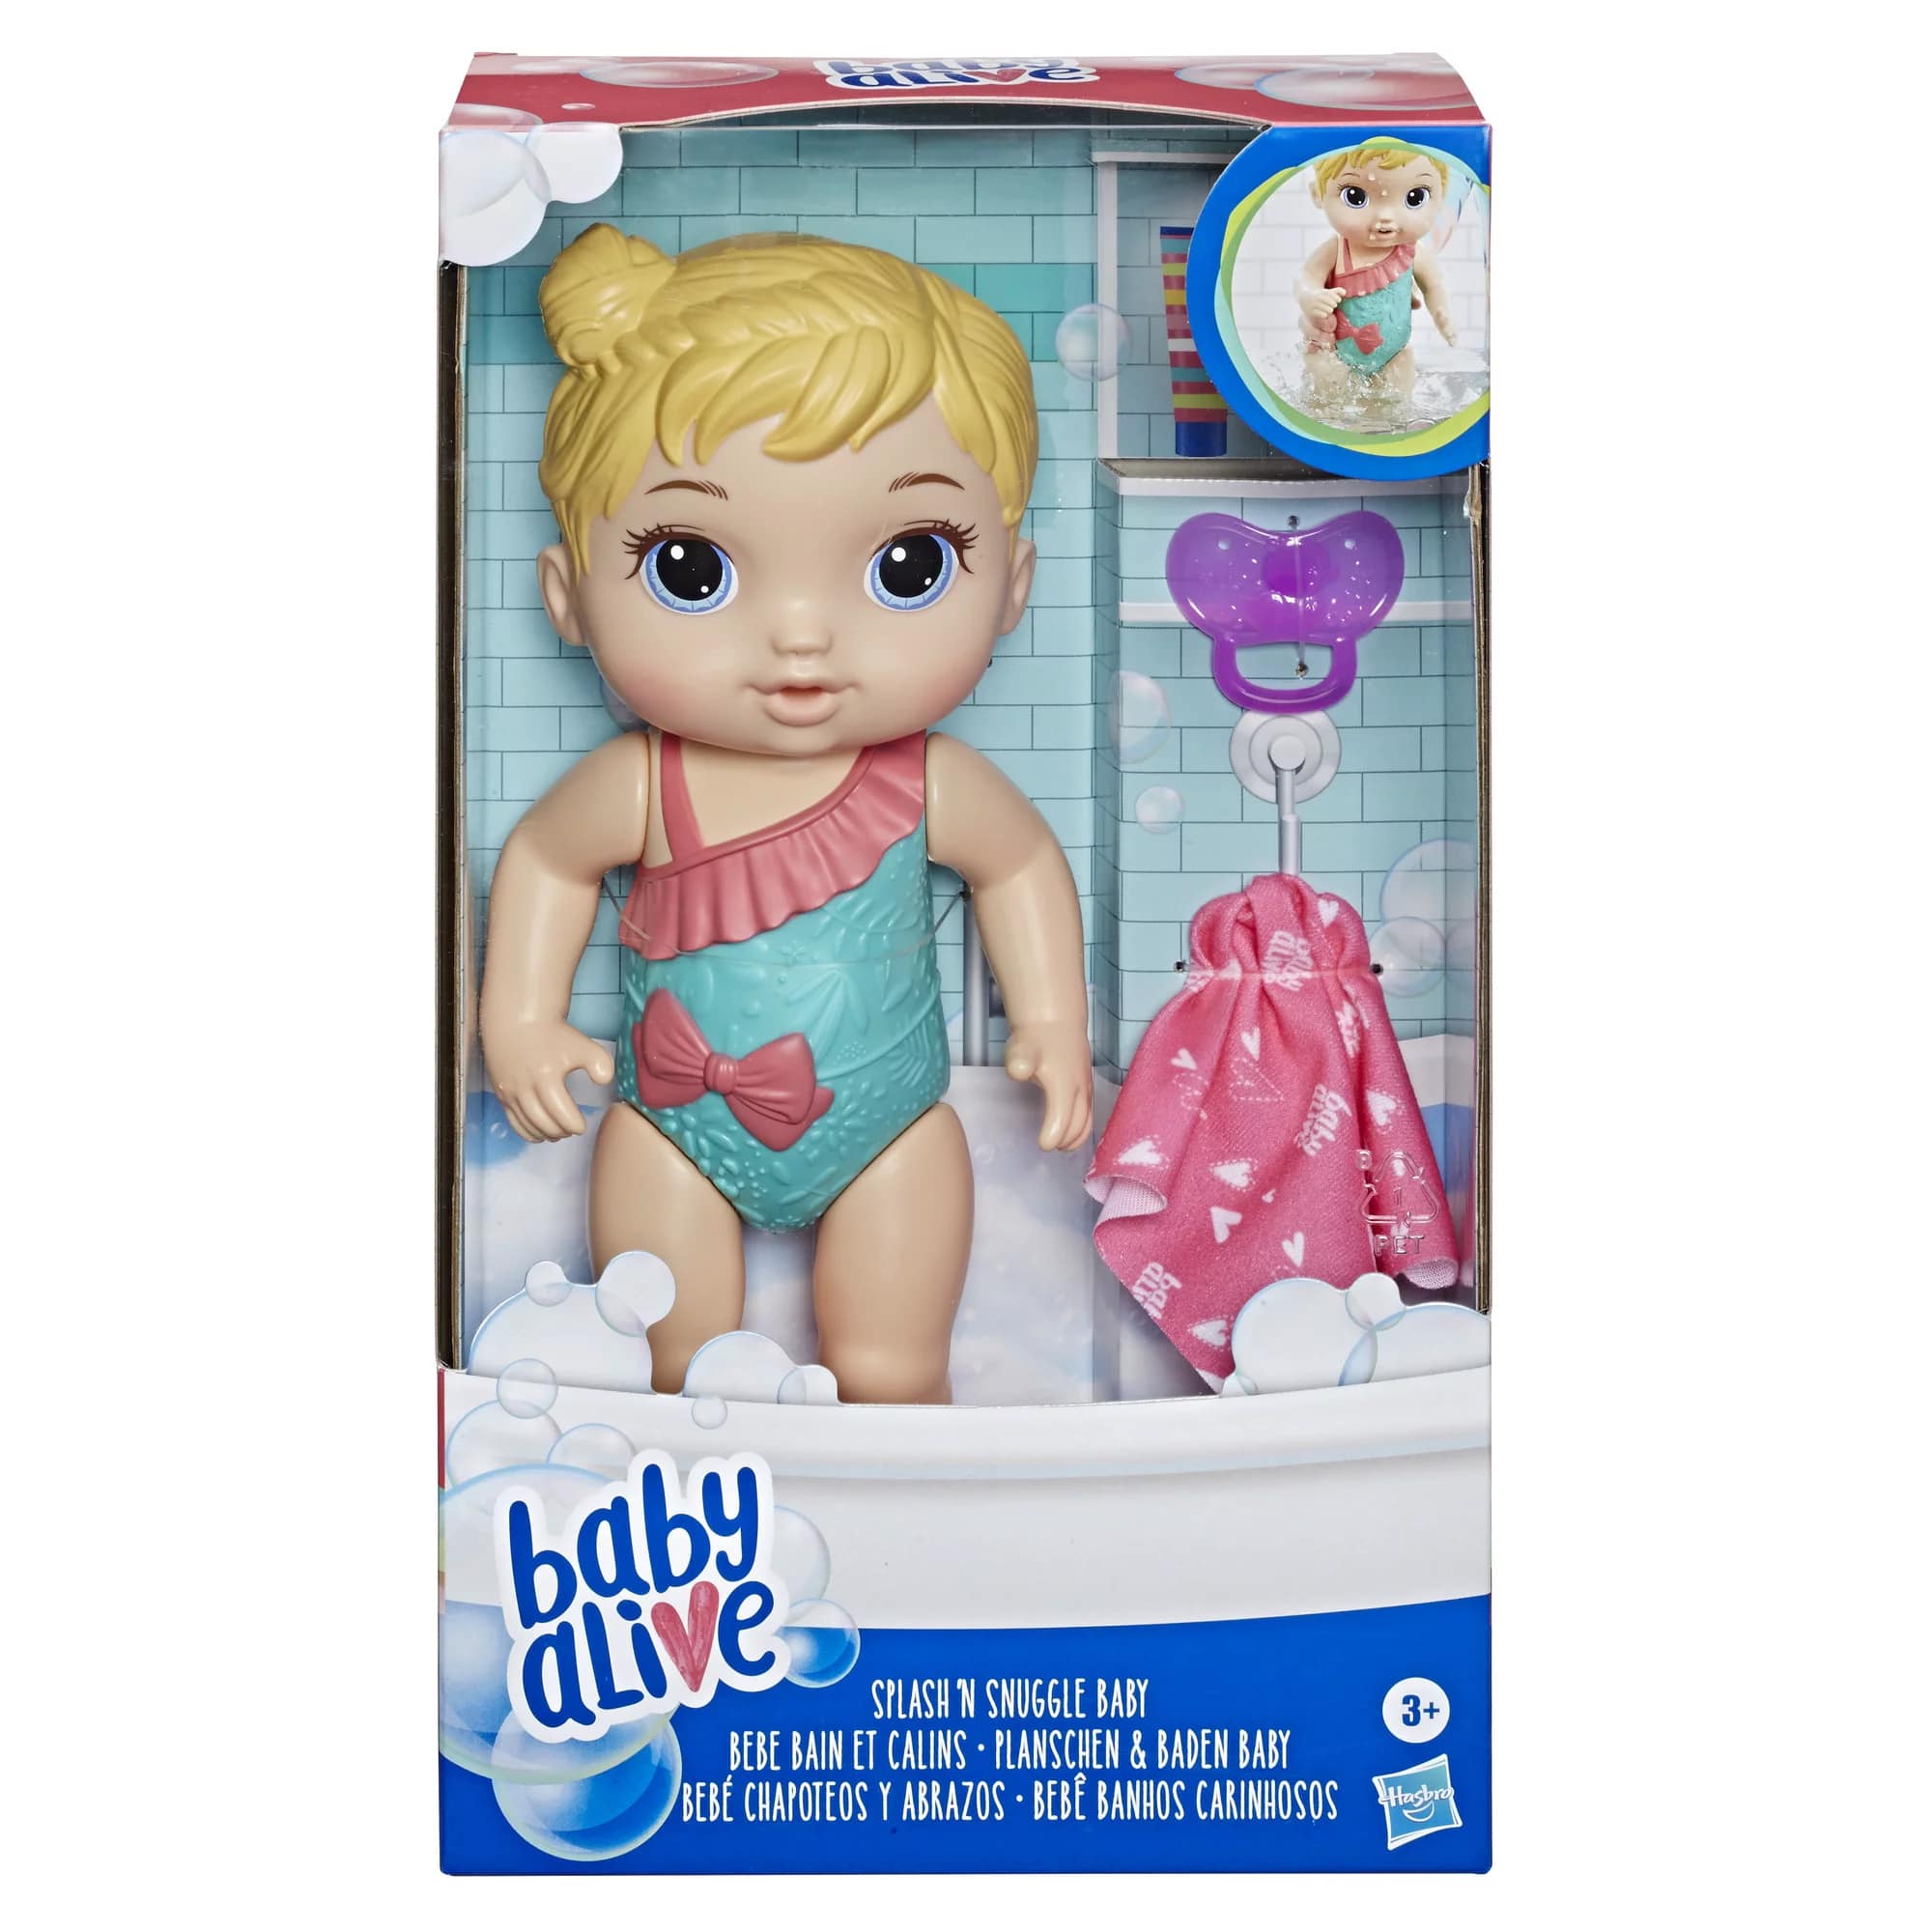 Hasbro Baby Alive Splash 'n Snuggle Baby Doll